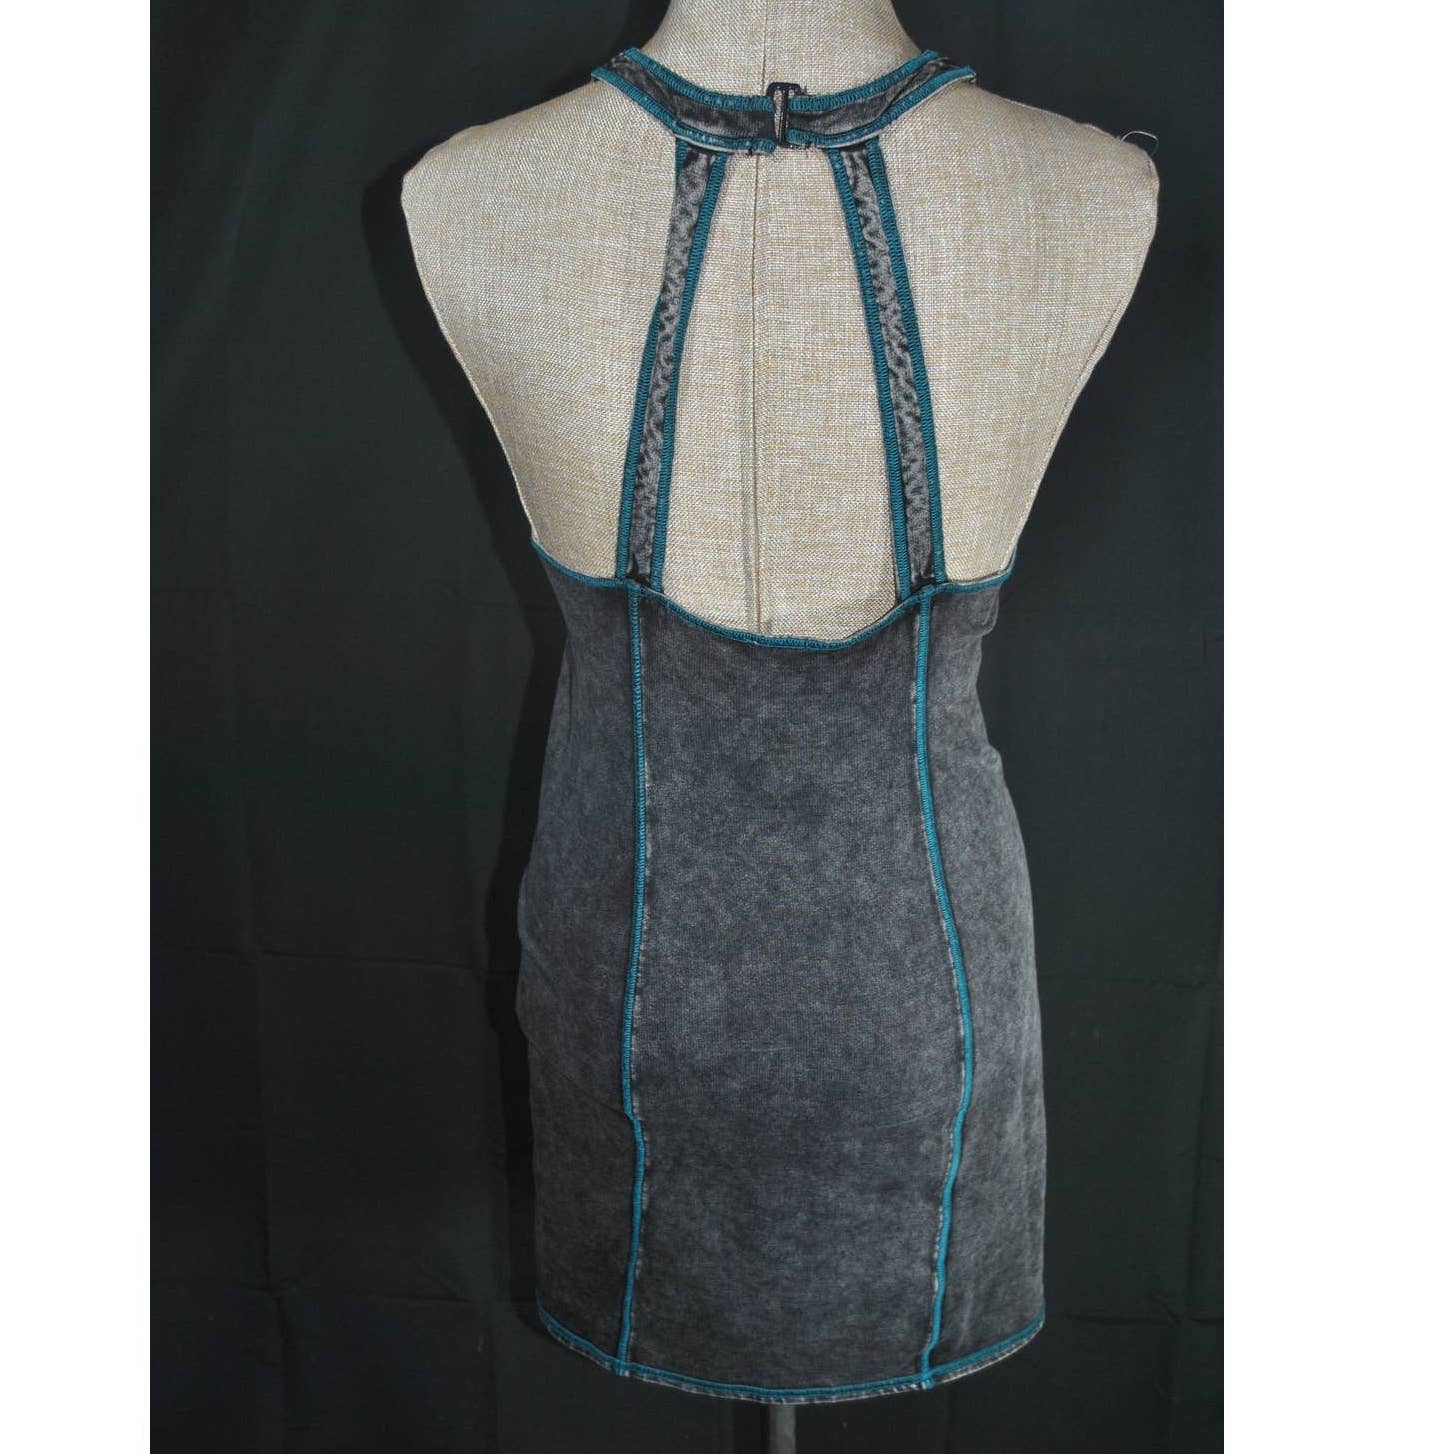 Intimately Free People Heather Gray Blue Stitched Sleeveless Dress- S